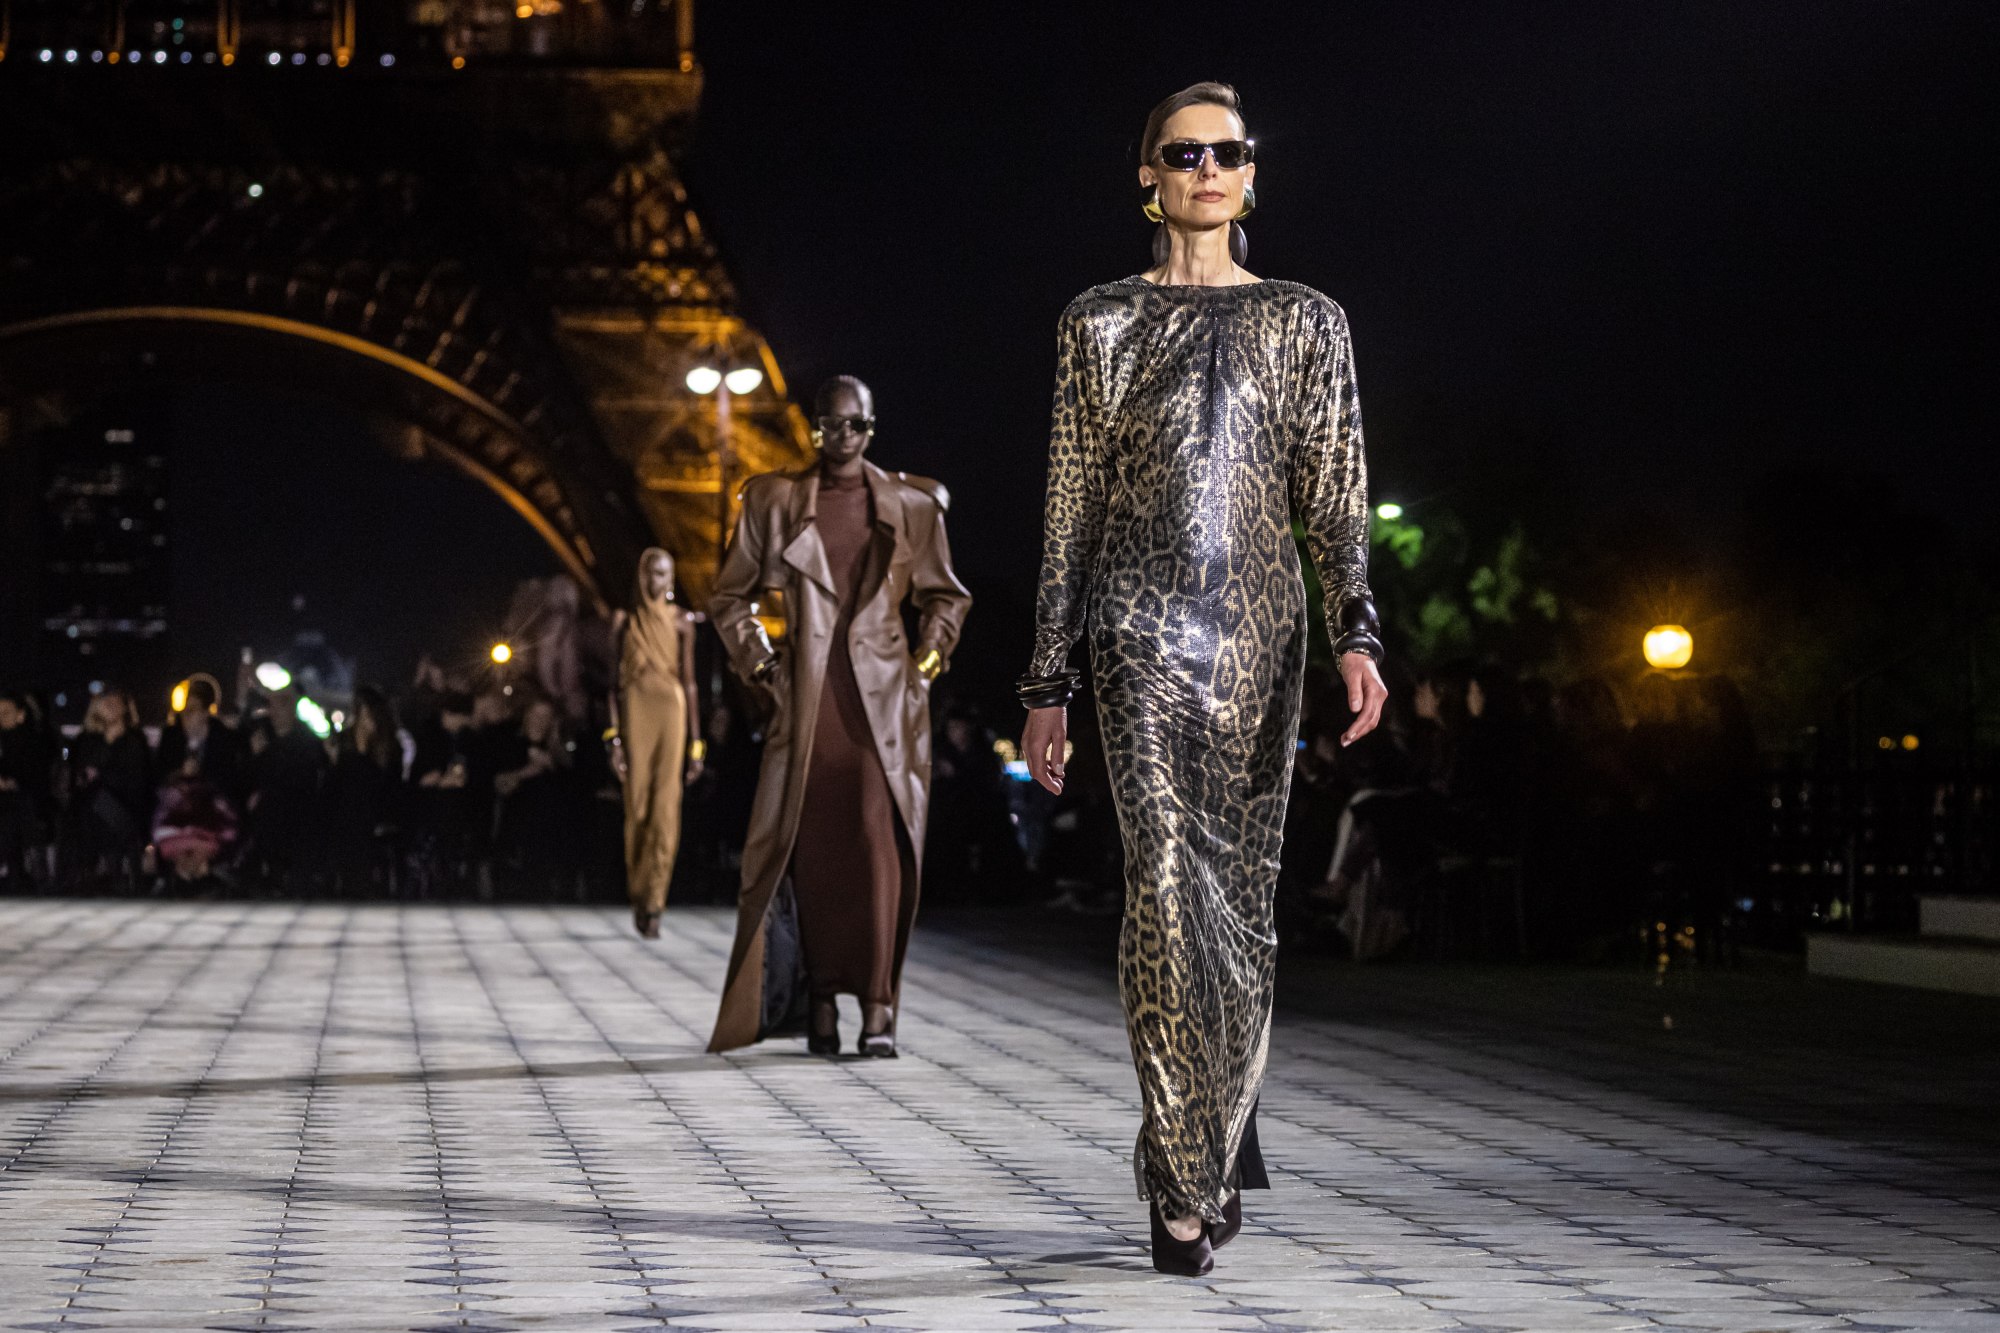 Join LVMH, Coty, Gucci, Shiseido, Chanel, Hermès and more at PCD Paris 2023